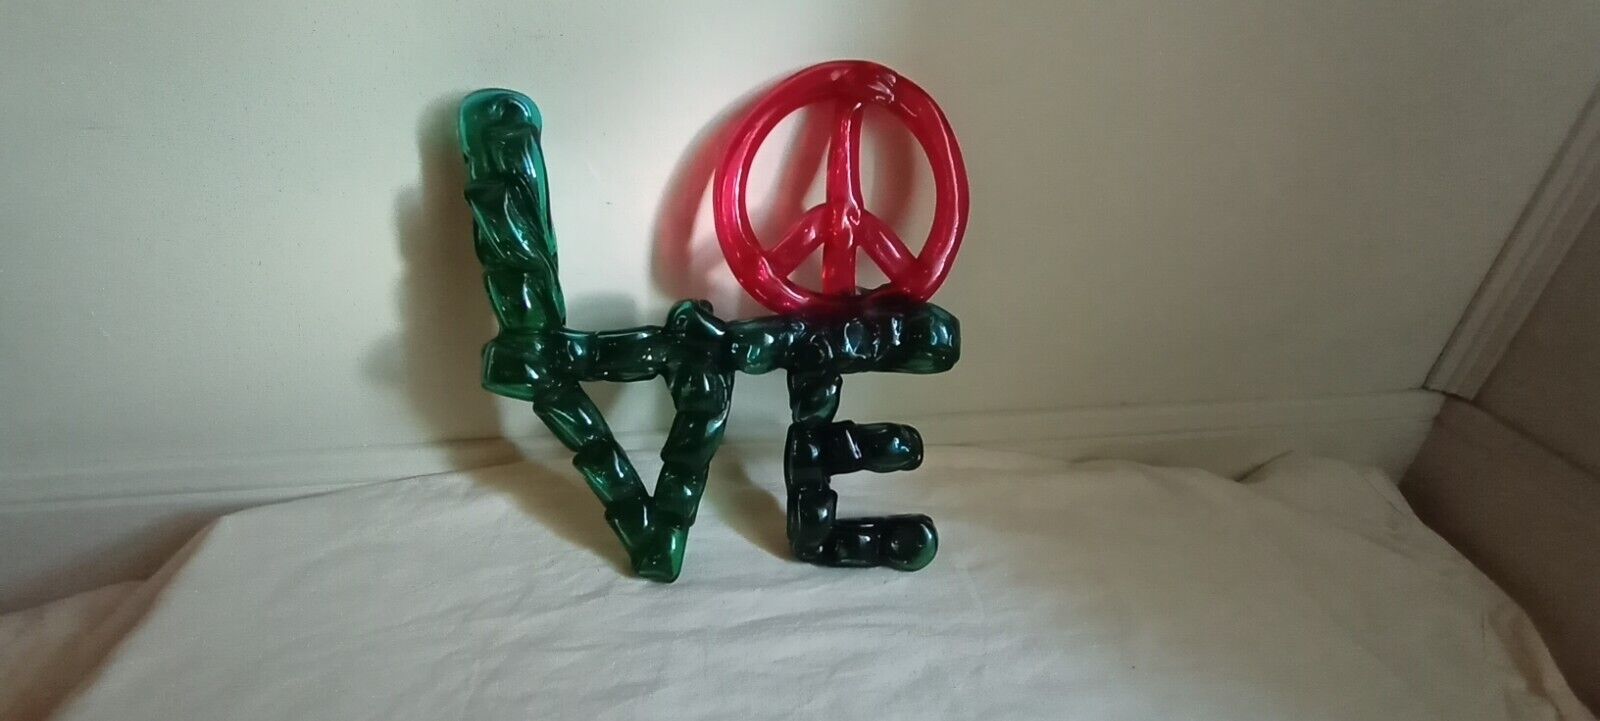 1970s Robert Indiana-Style LOVE Sign (plastic)